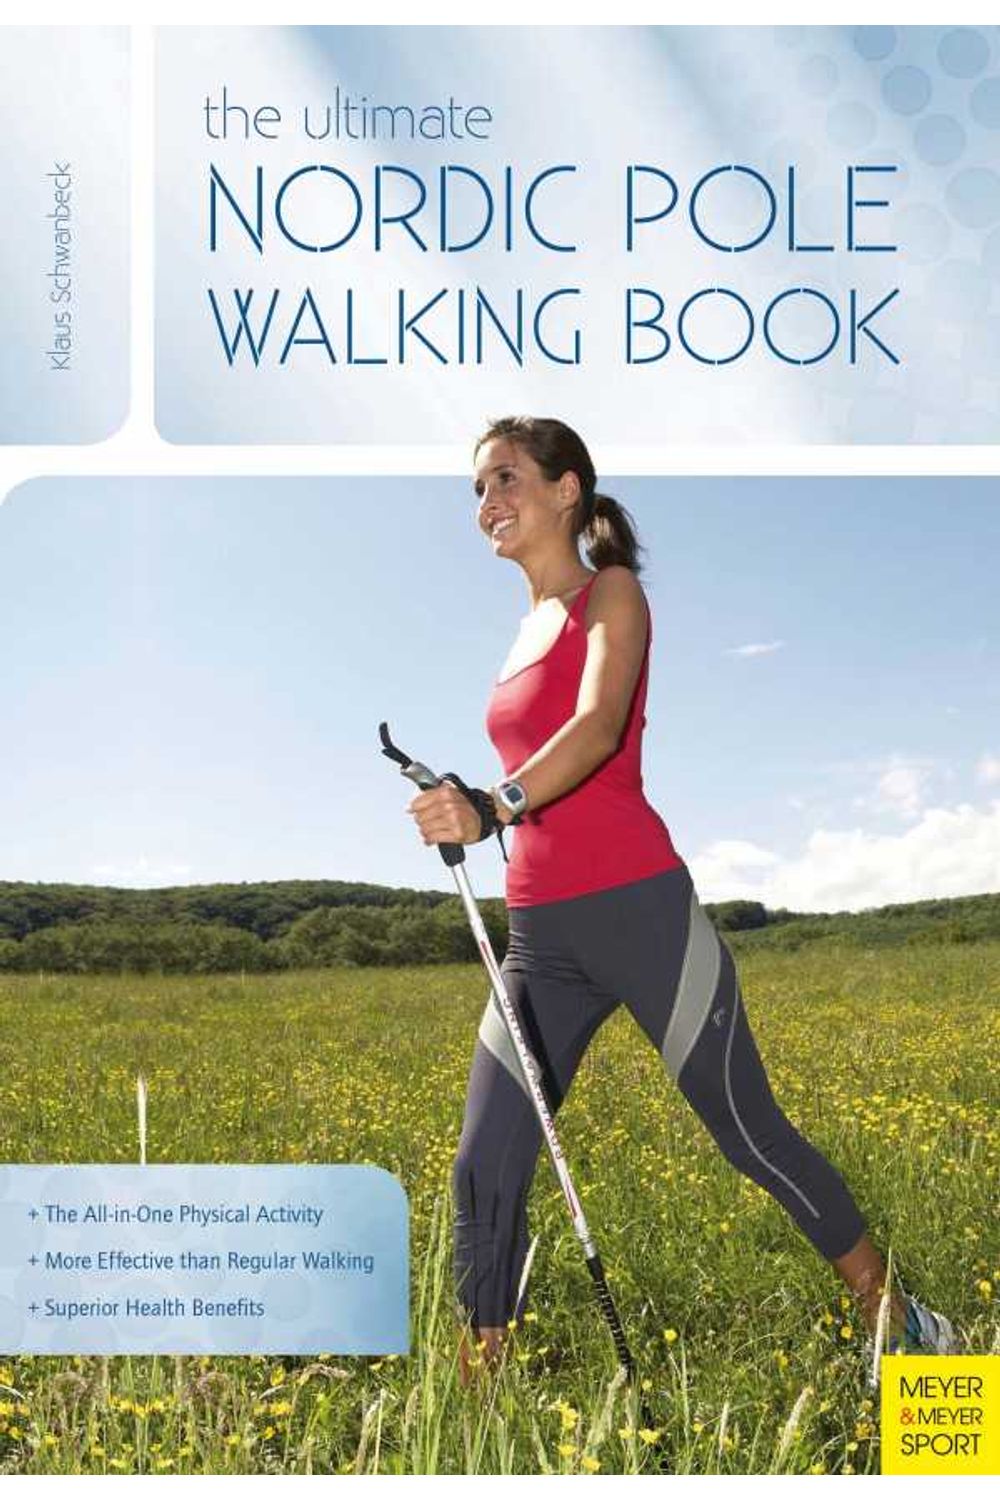 bw-the-ultimate-nordic-pole-walking-book-meyer-meyer-sport-9781782557081